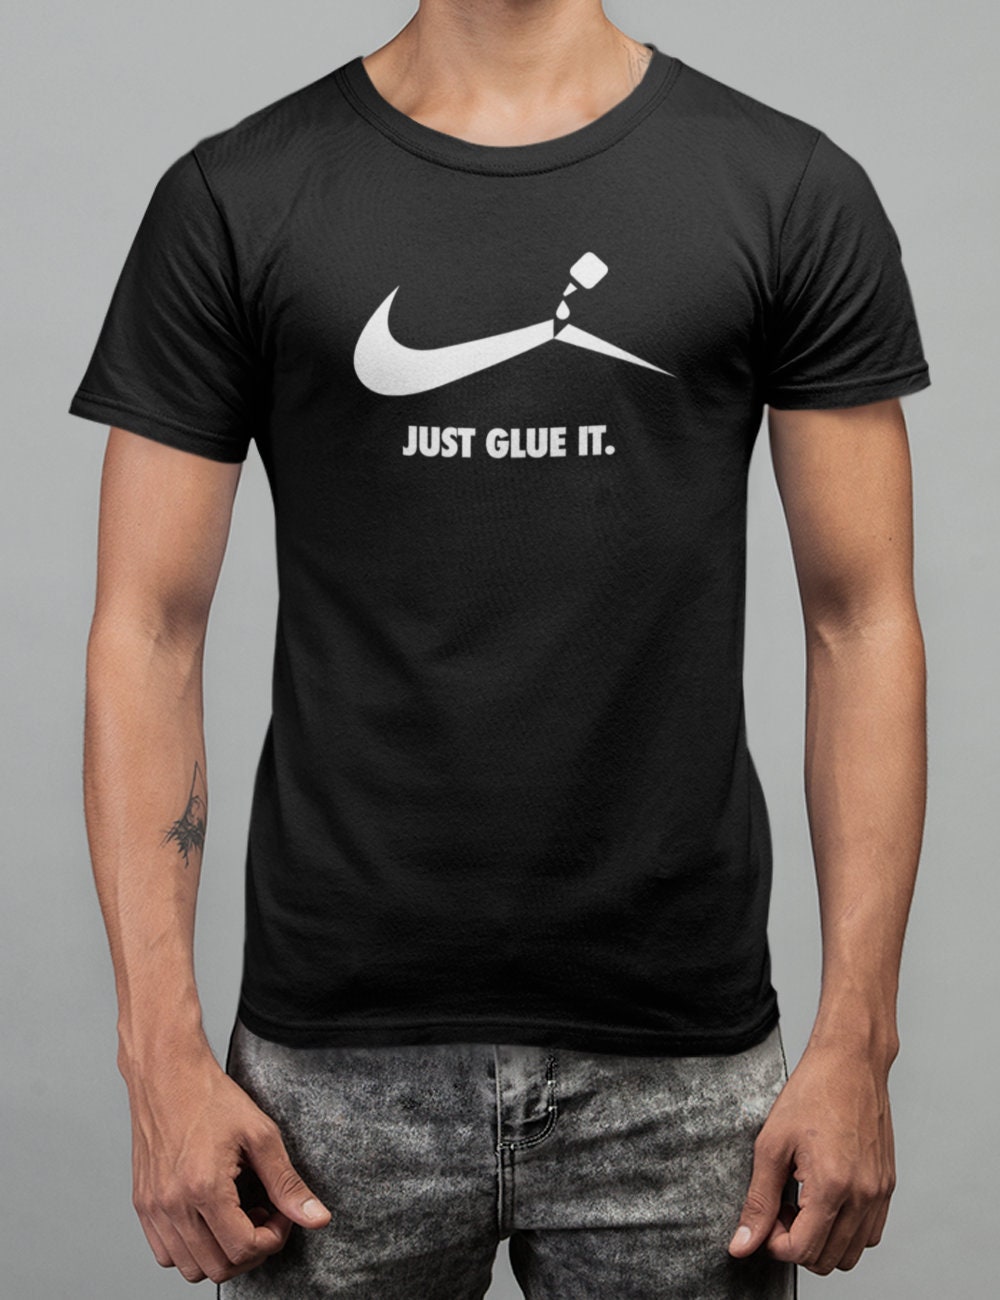 Nike Logo Funny Nike Tshirt Just Glue It - Etsy